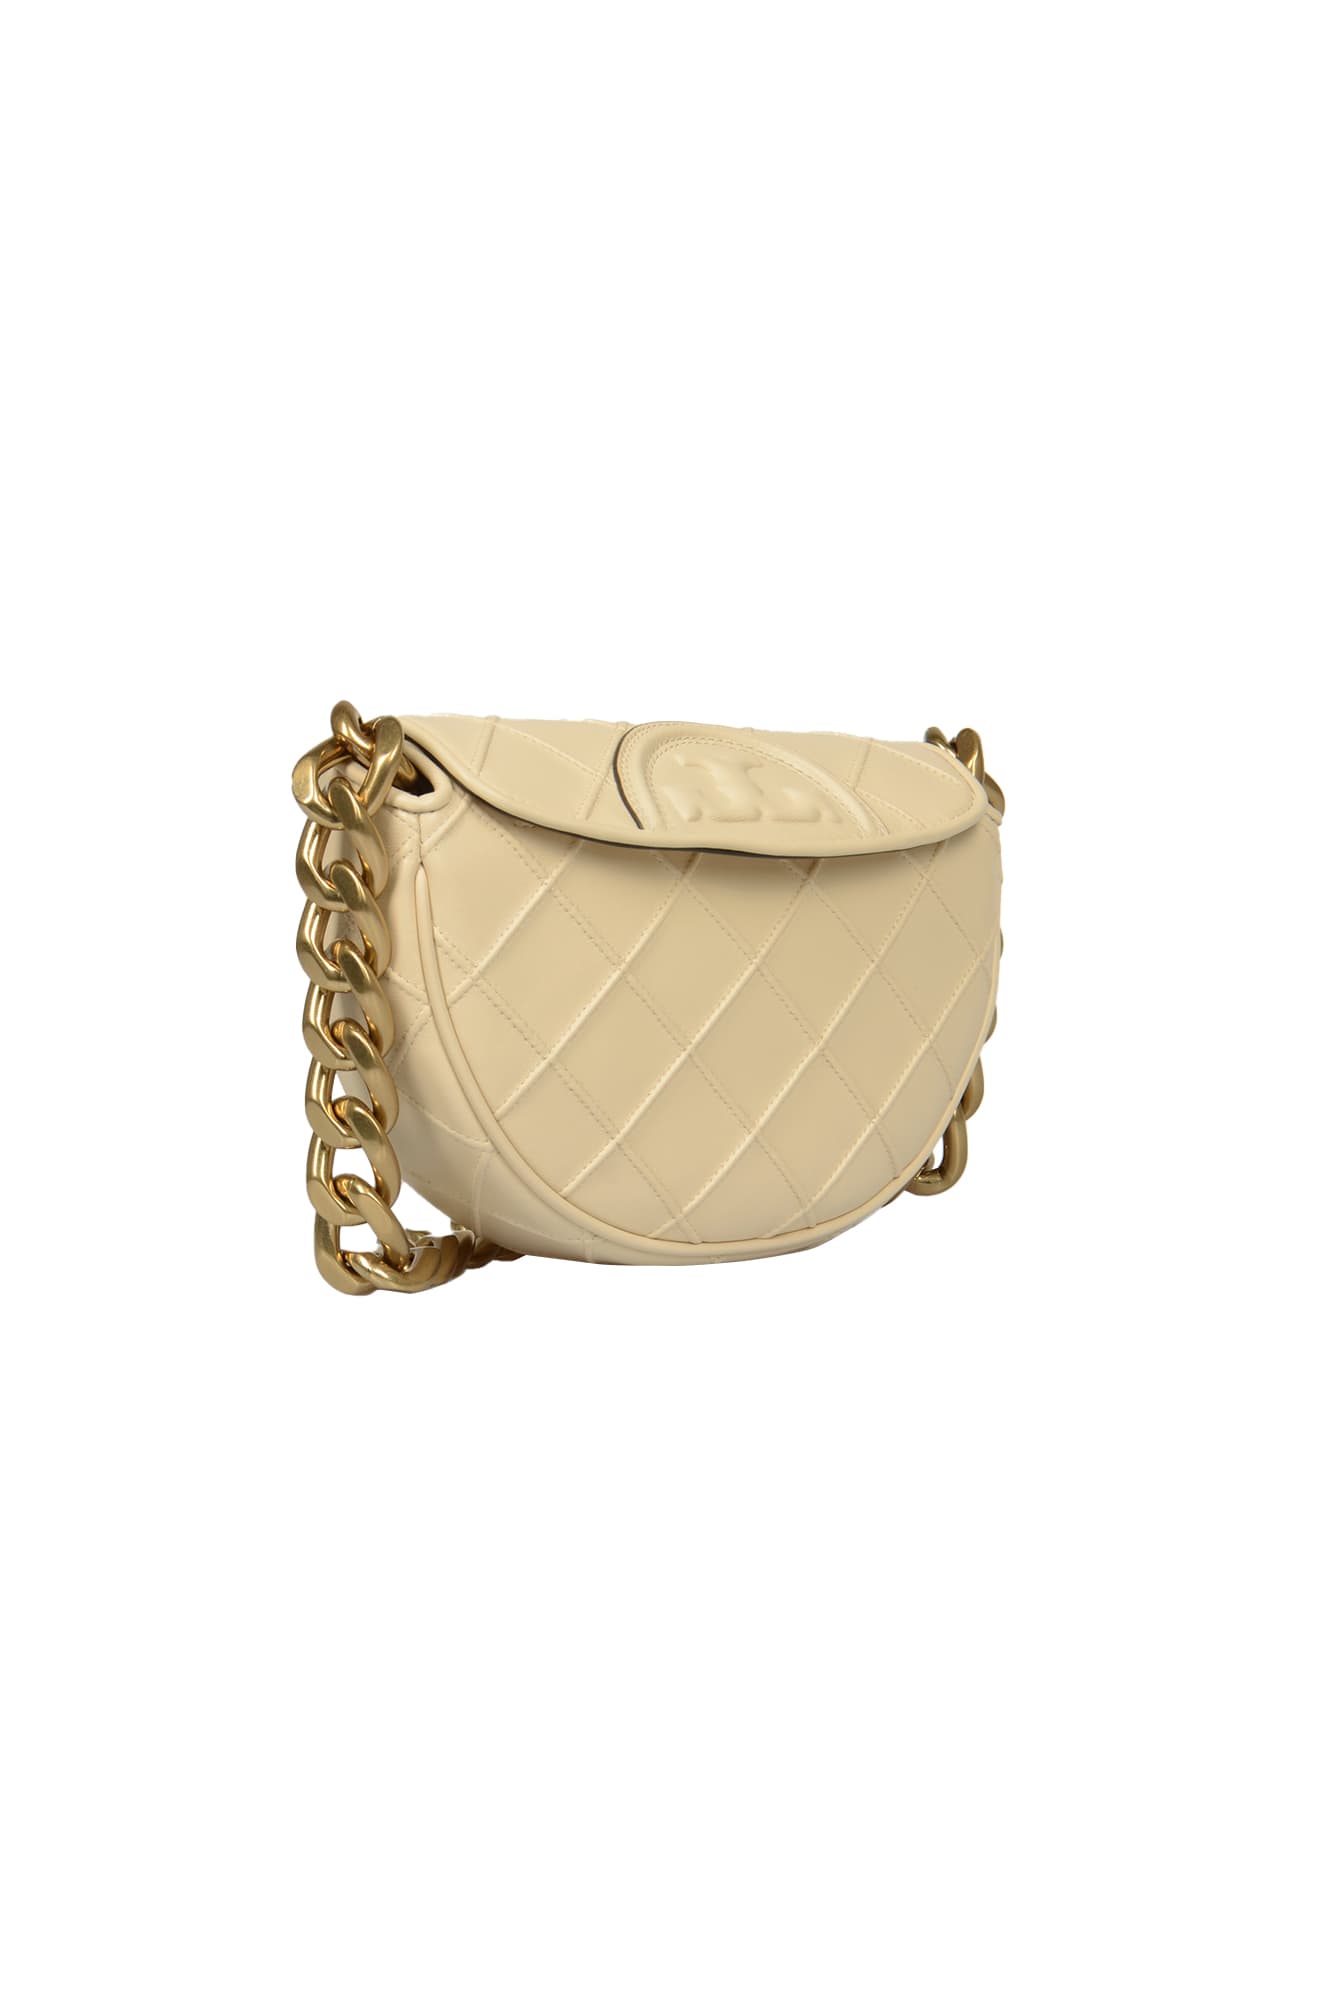 Tory Burch Mini Fleming Soft Crescent Shoulder Bag in New Cream